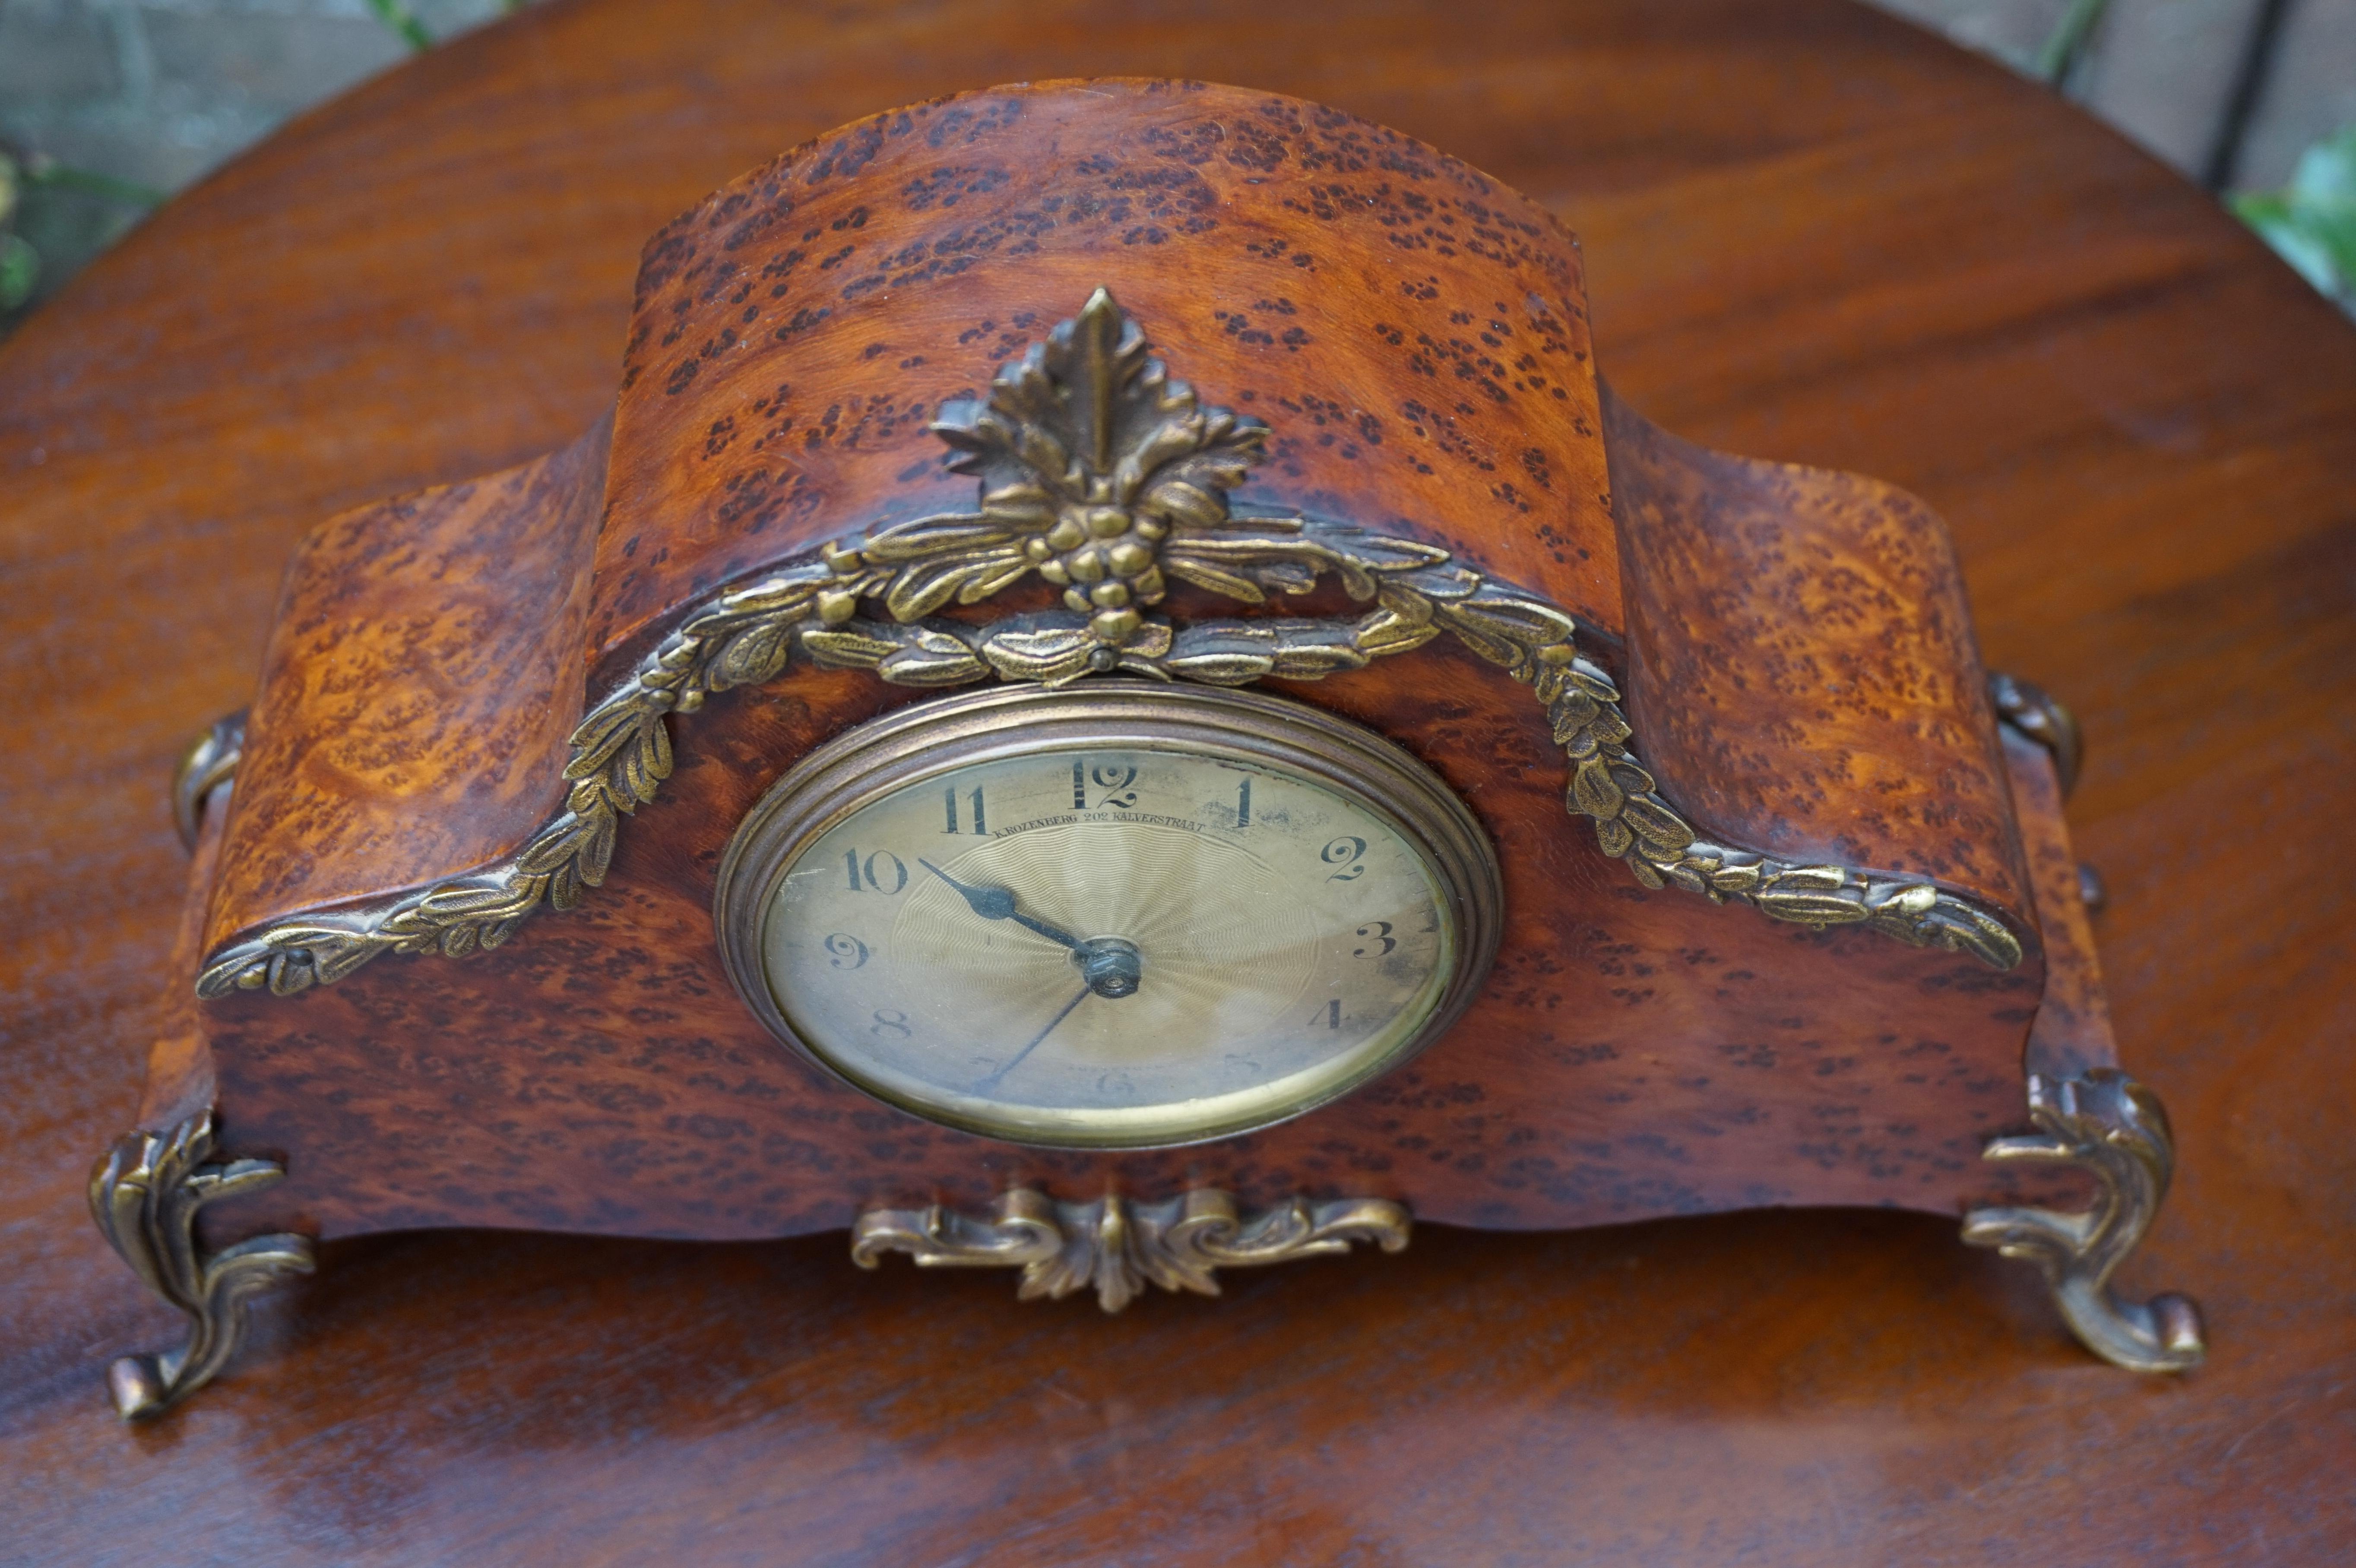 Stunning Burl Walnut Table or Mantel Clock with Stylish Bronze Feet & Ornaments 7